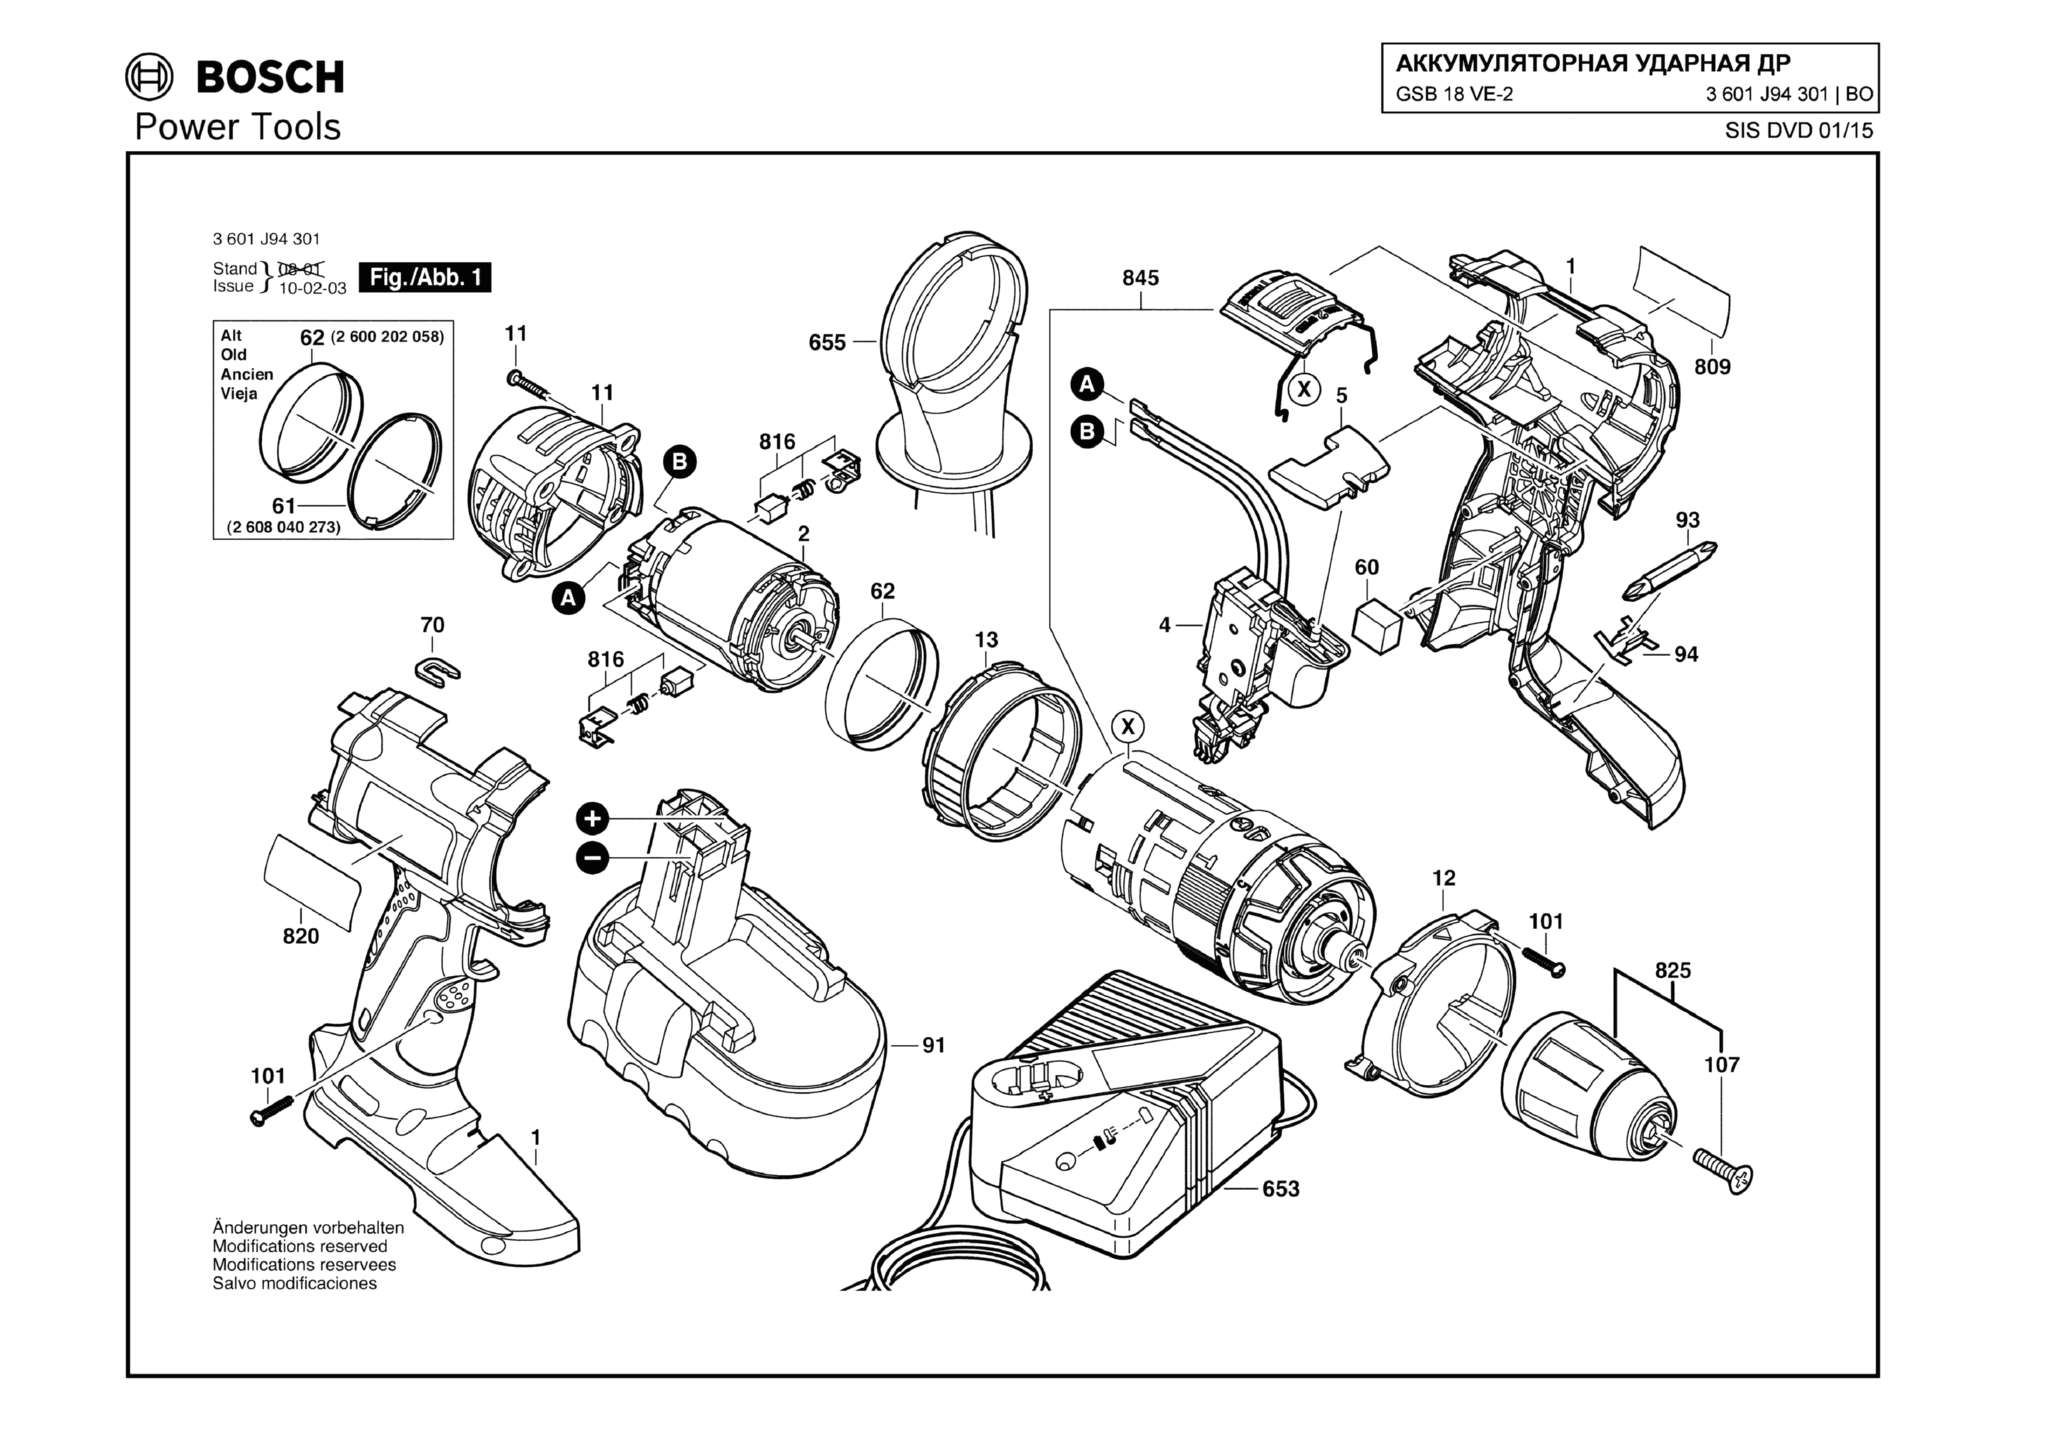 Запчасти, схема и деталировка Bosch GSB 18 VE-2 (ТИП 3601J94301)